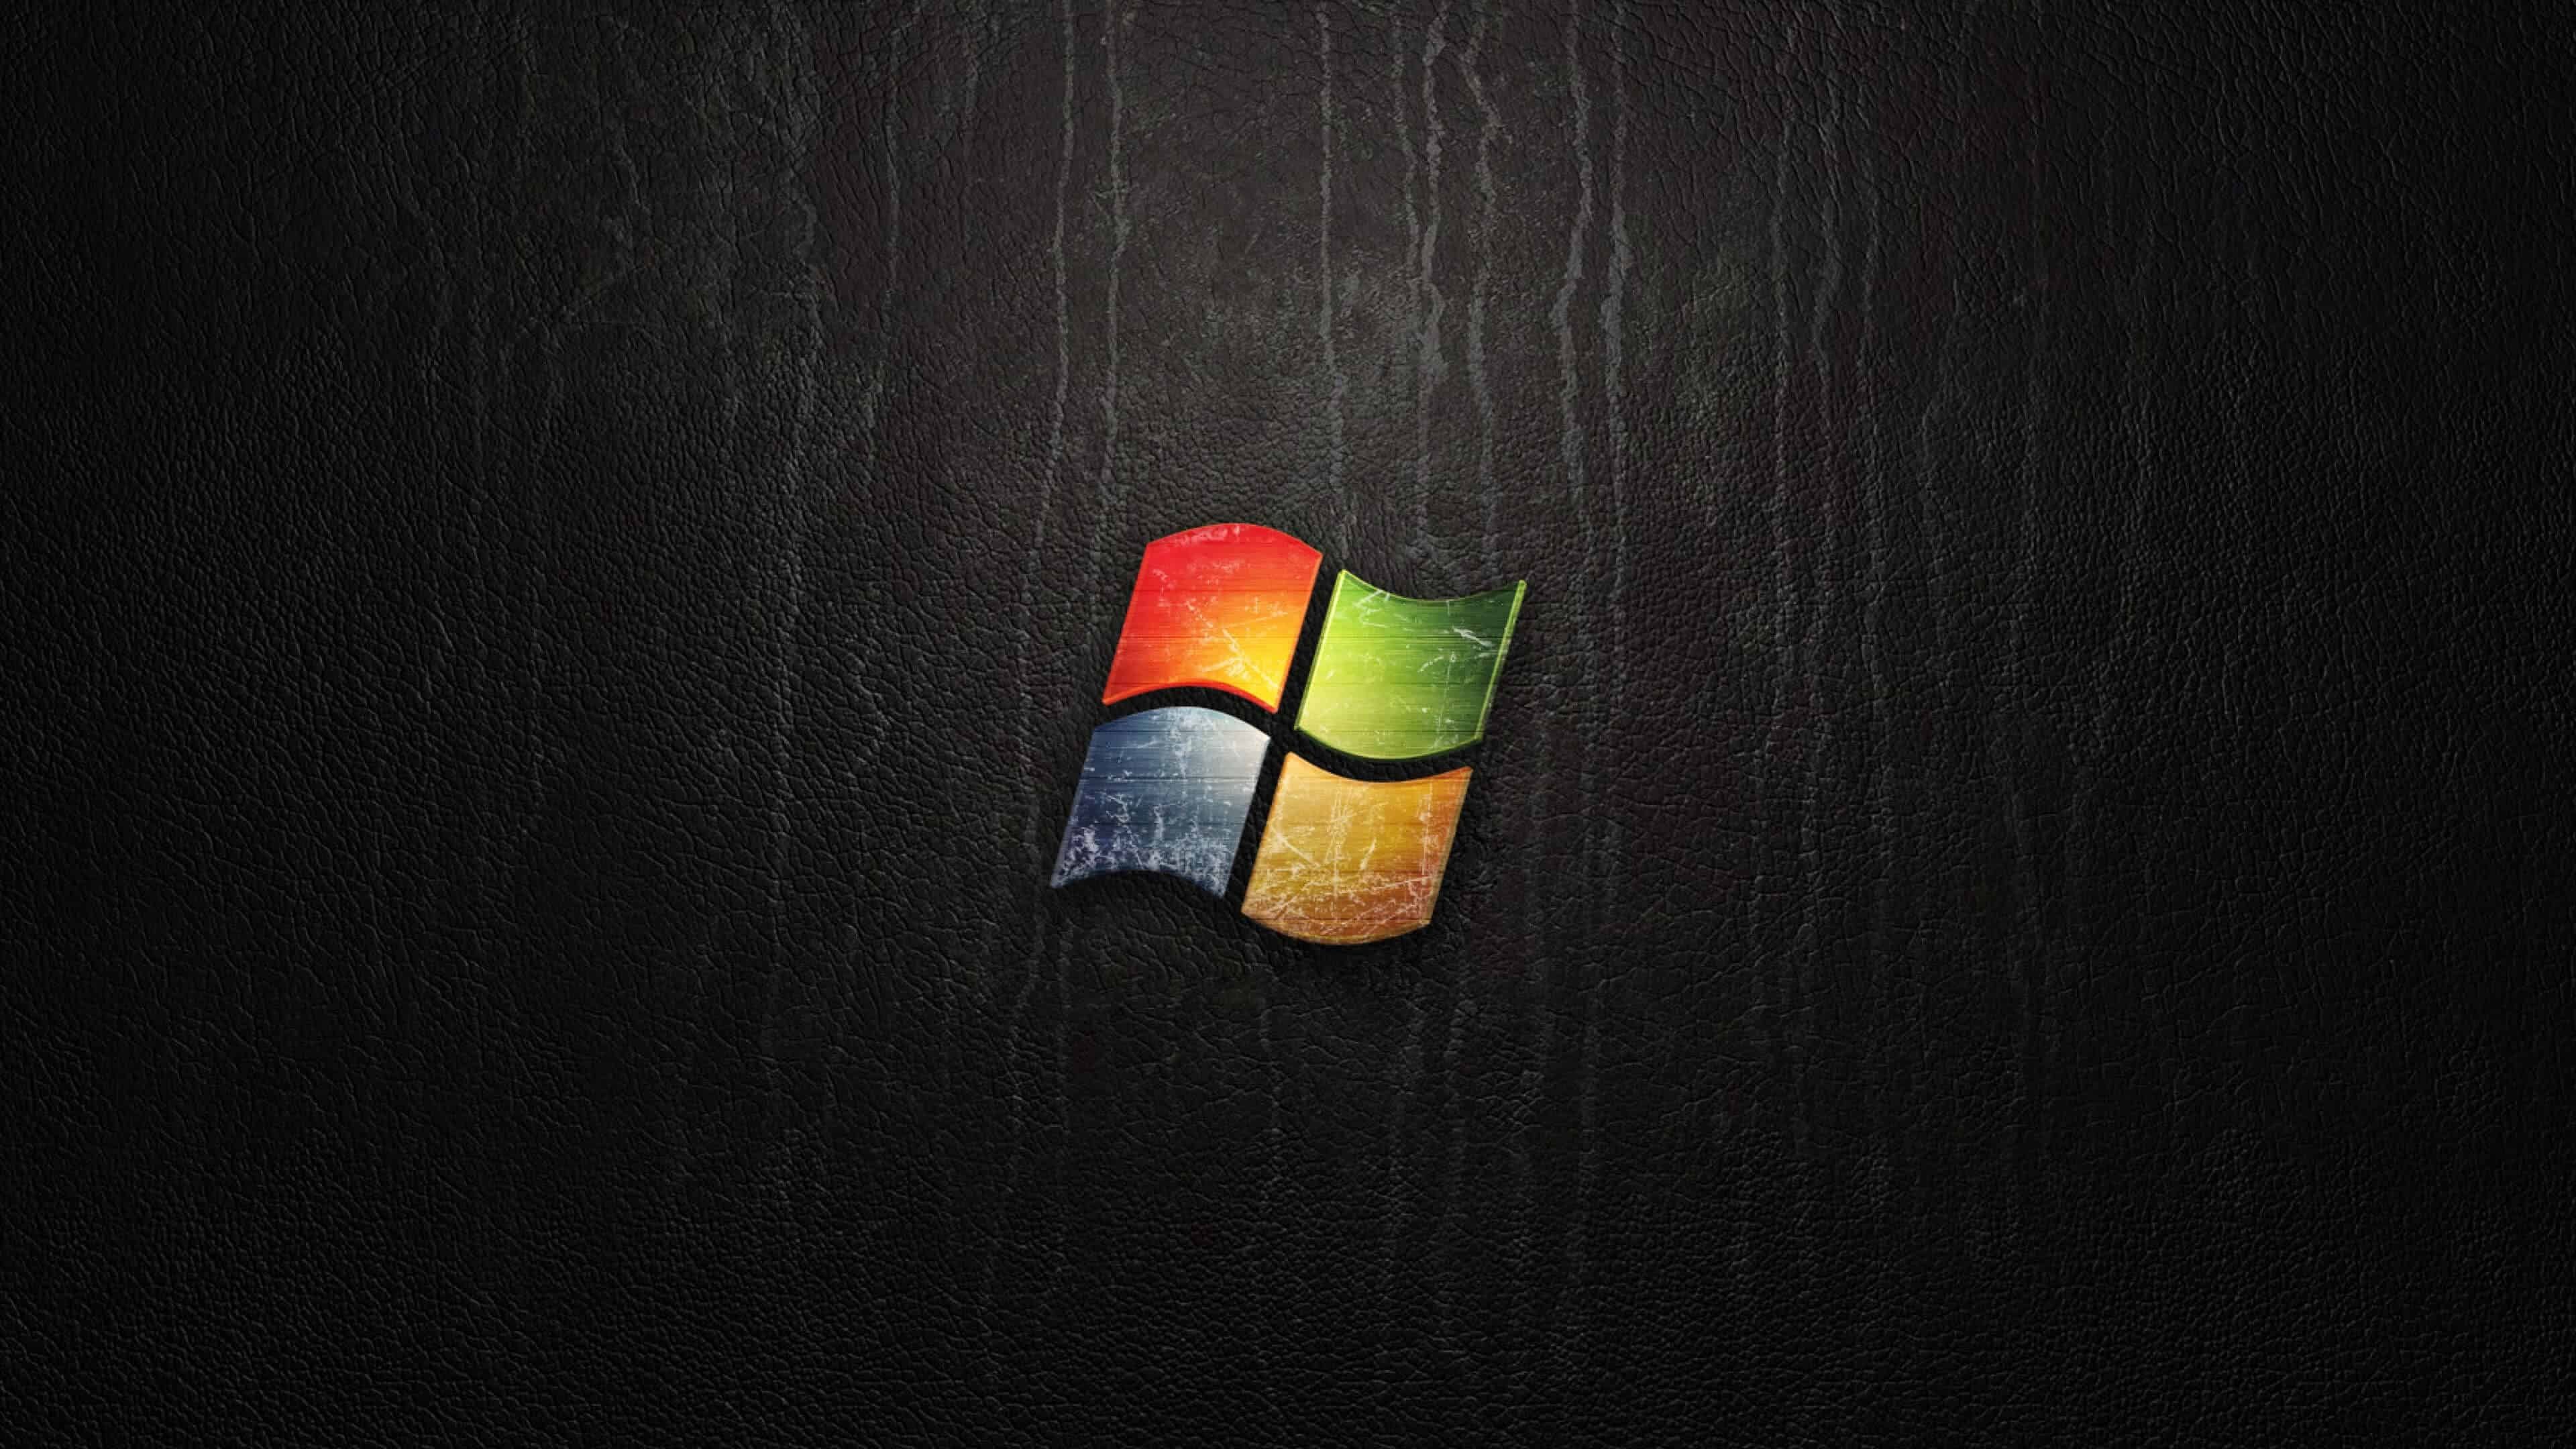  Microsoft Hintergrundbild 3840x2160. Microsoft Wallpaper: 4K, HD, 1920x1080 Phone & Desktop Background